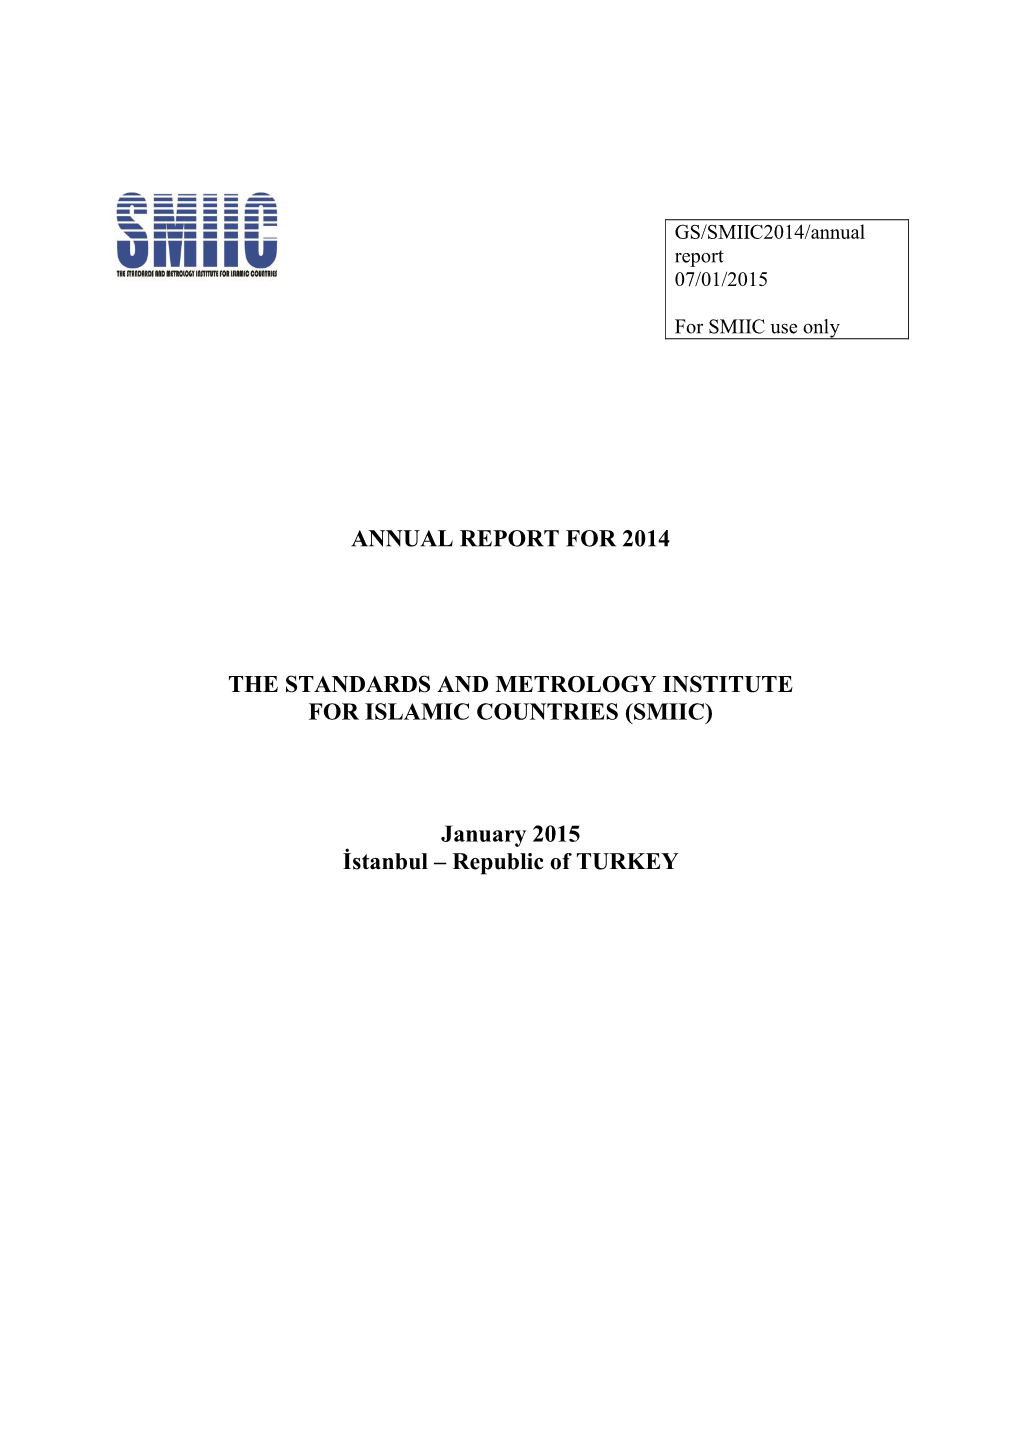 SMIIC2014/Annual Report 07/01/2015